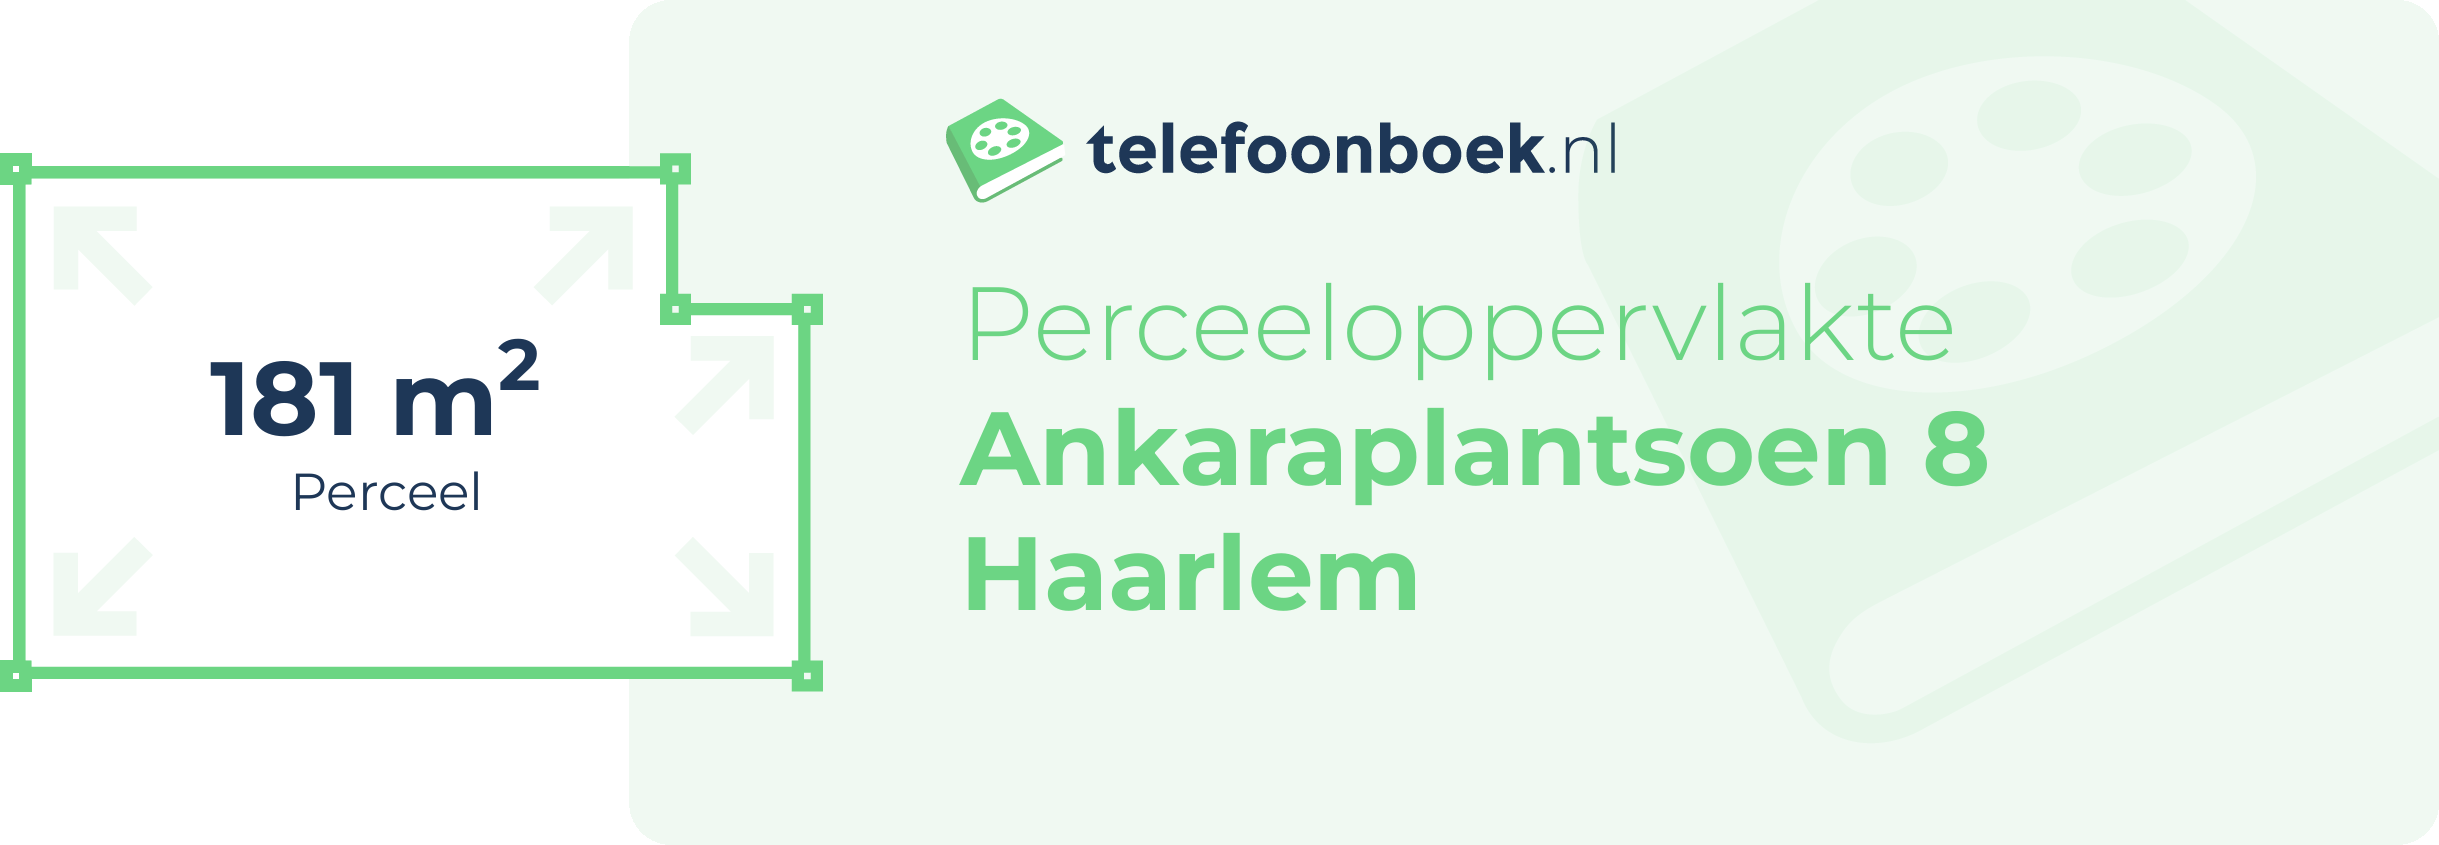 Perceeloppervlakte Ankaraplantsoen 8 Haarlem